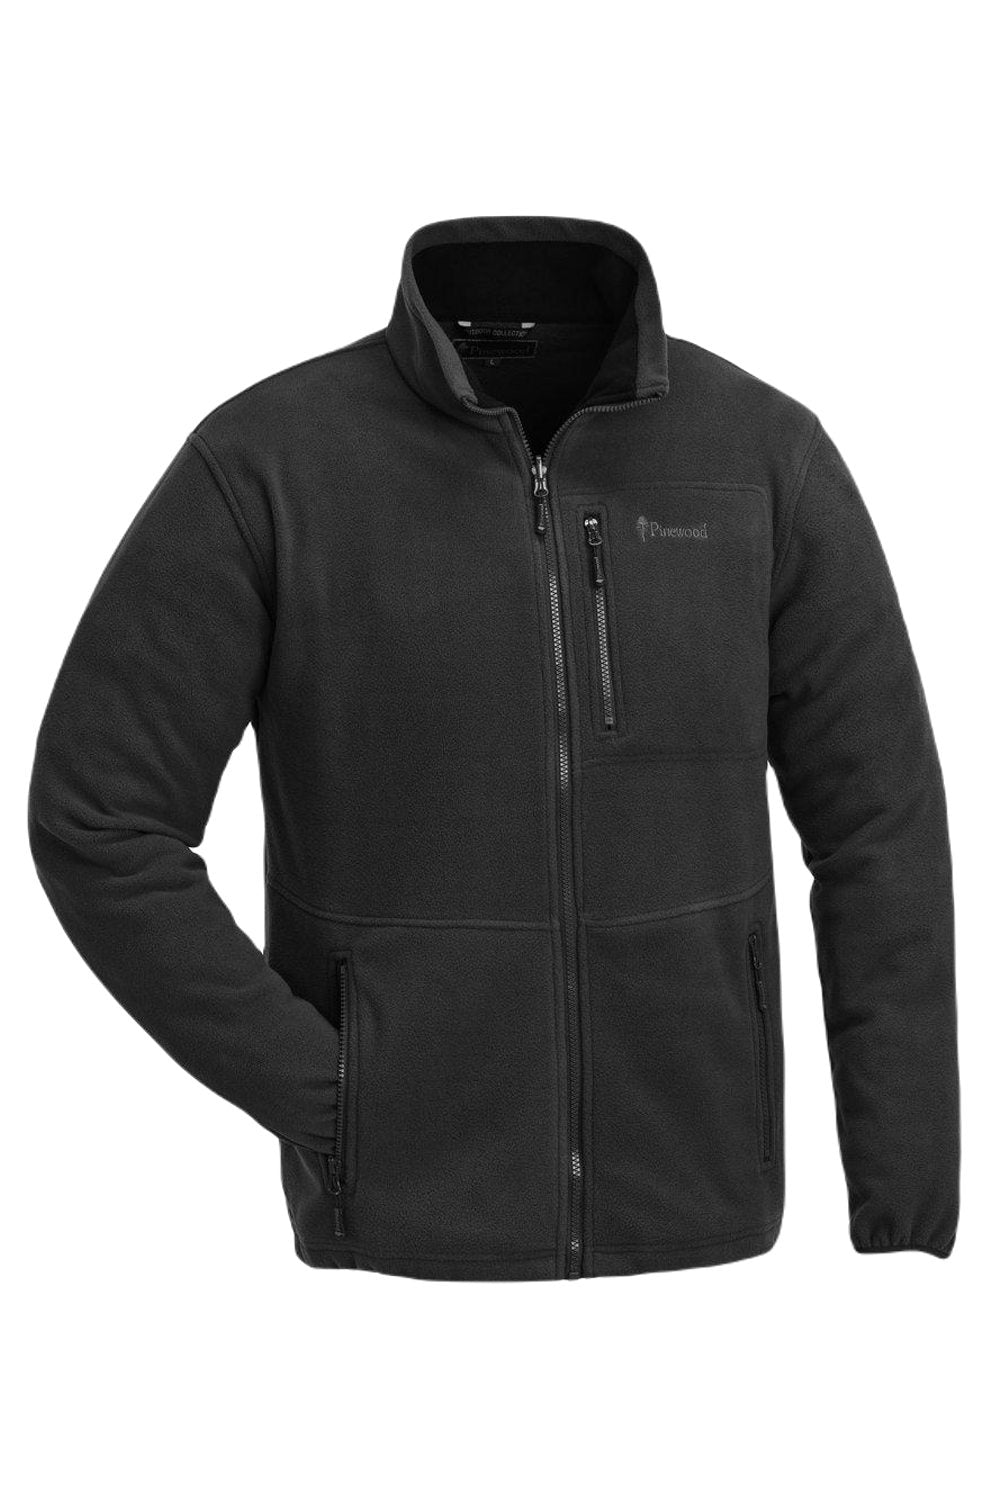 Pinewood Mens Finnveden Fleece Jacket In Black 